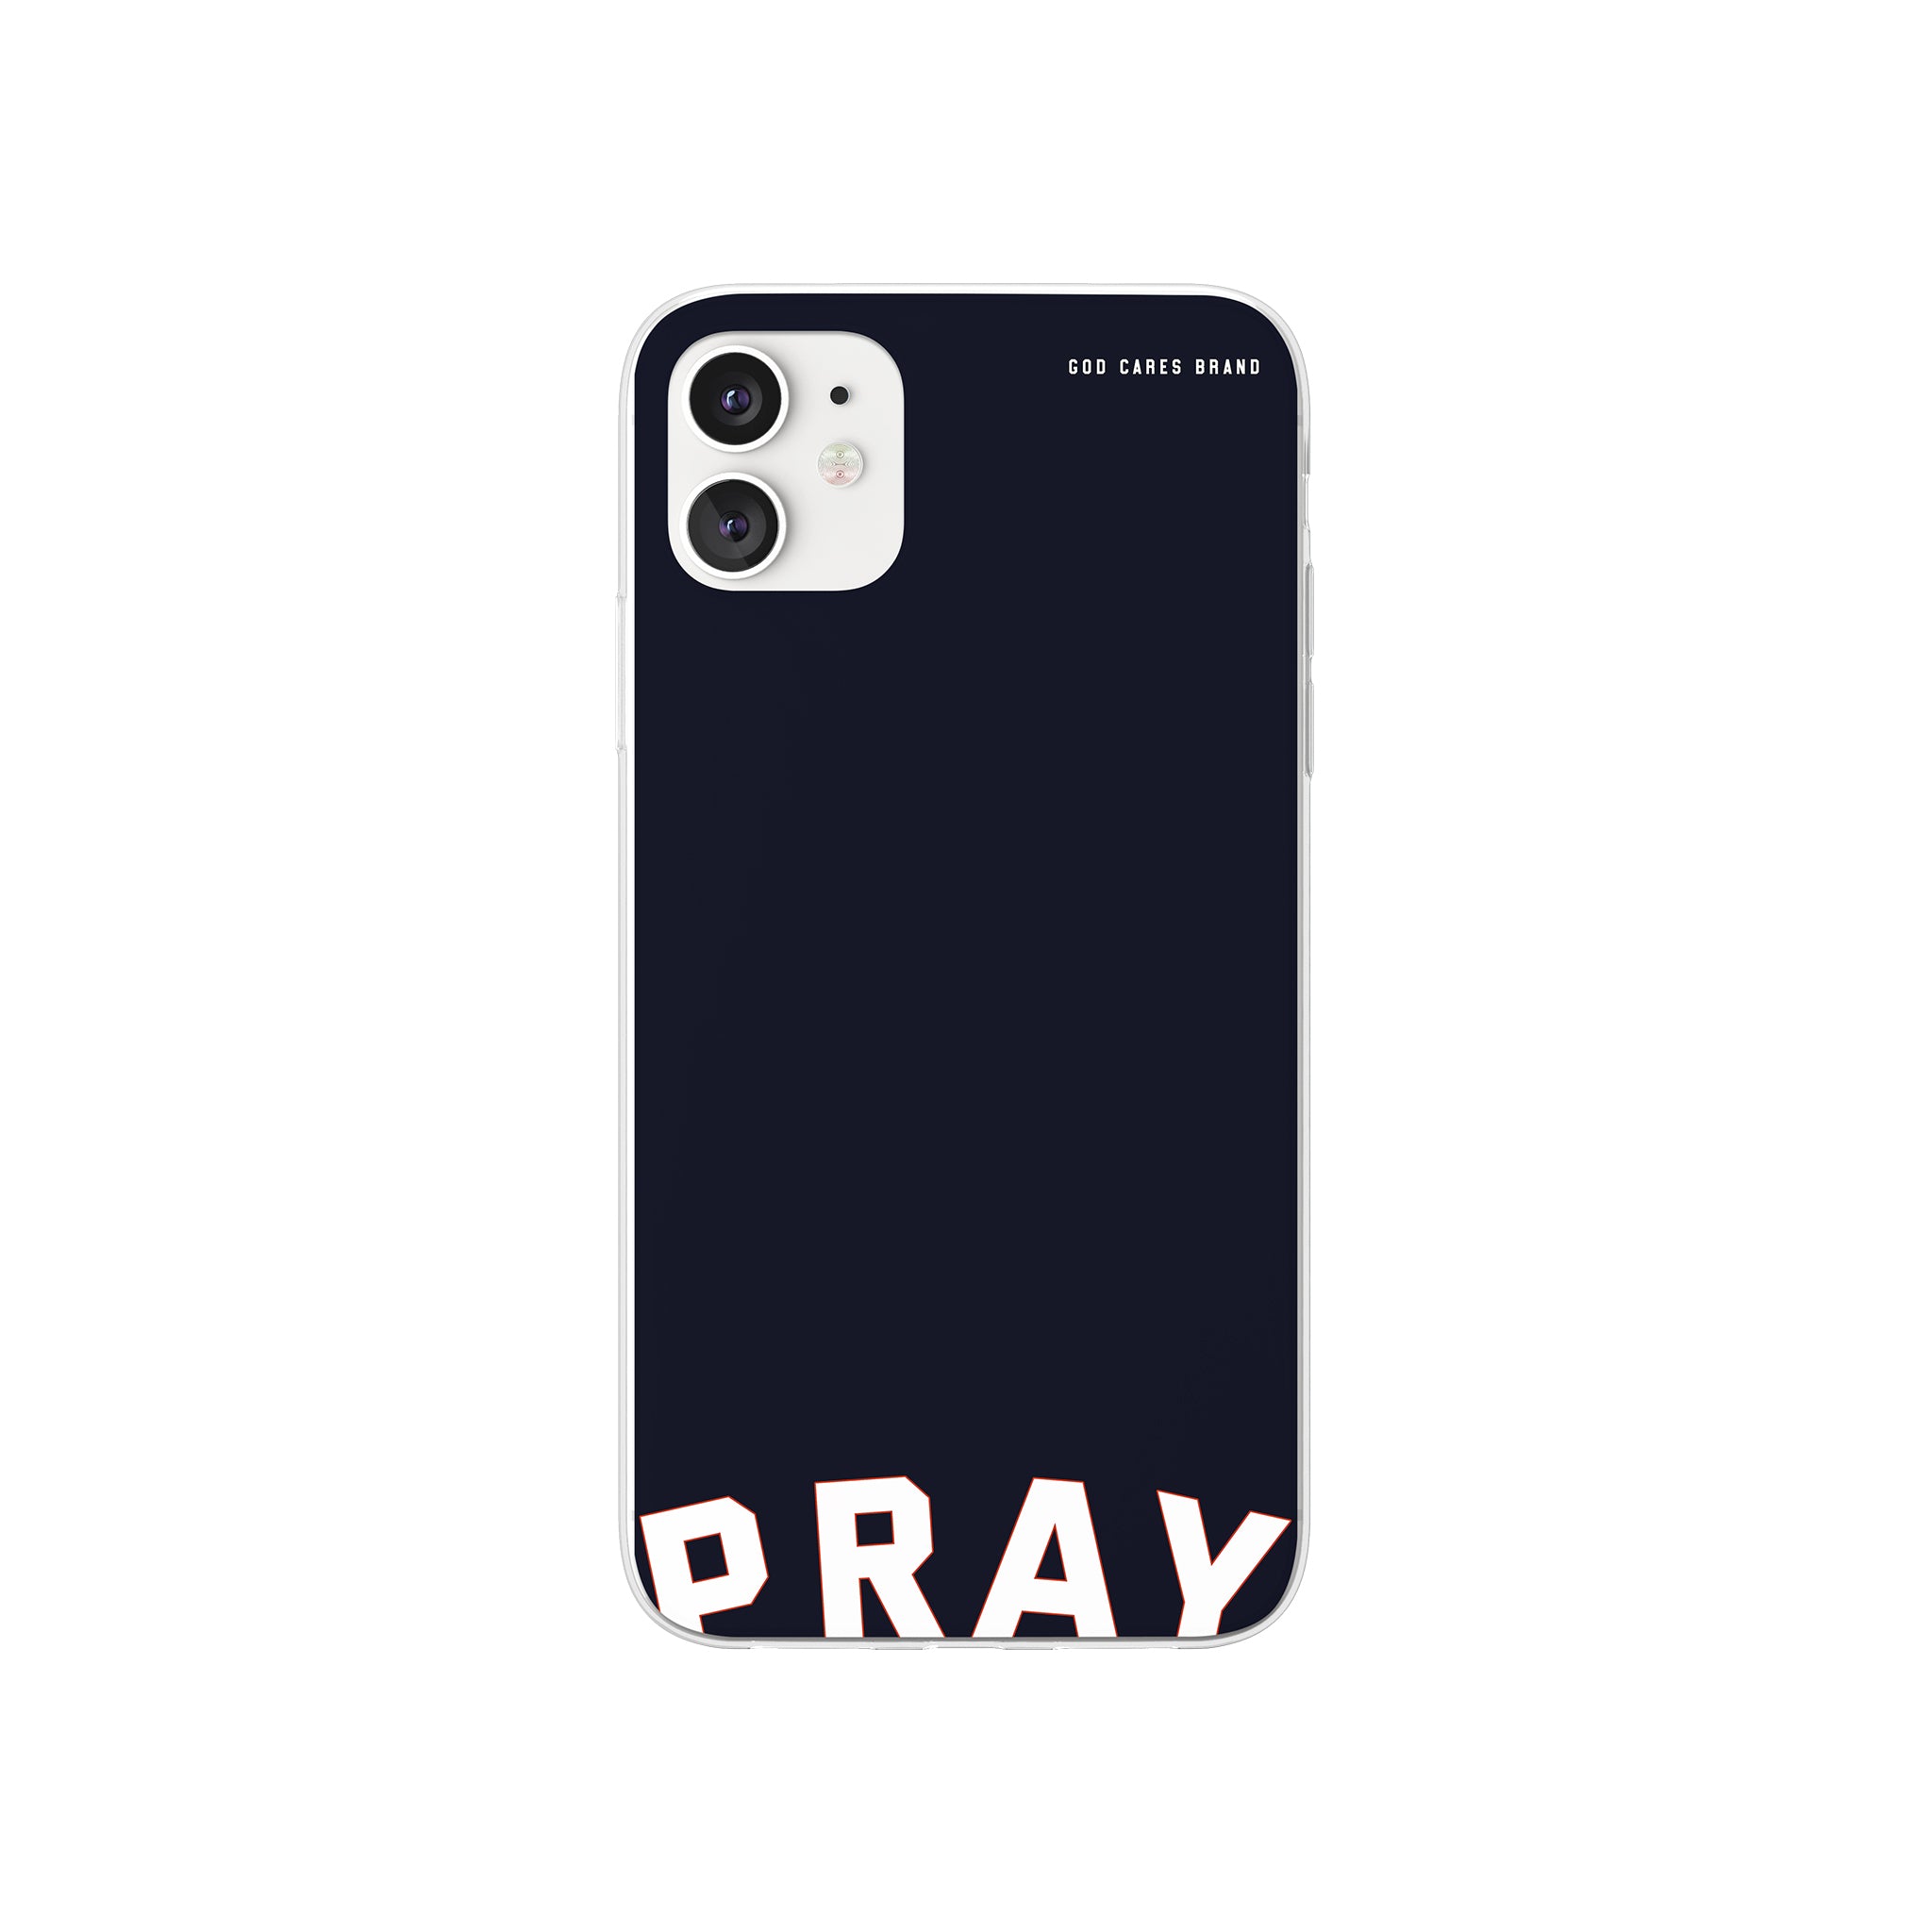 Pray iPhone Case Midnight Blue